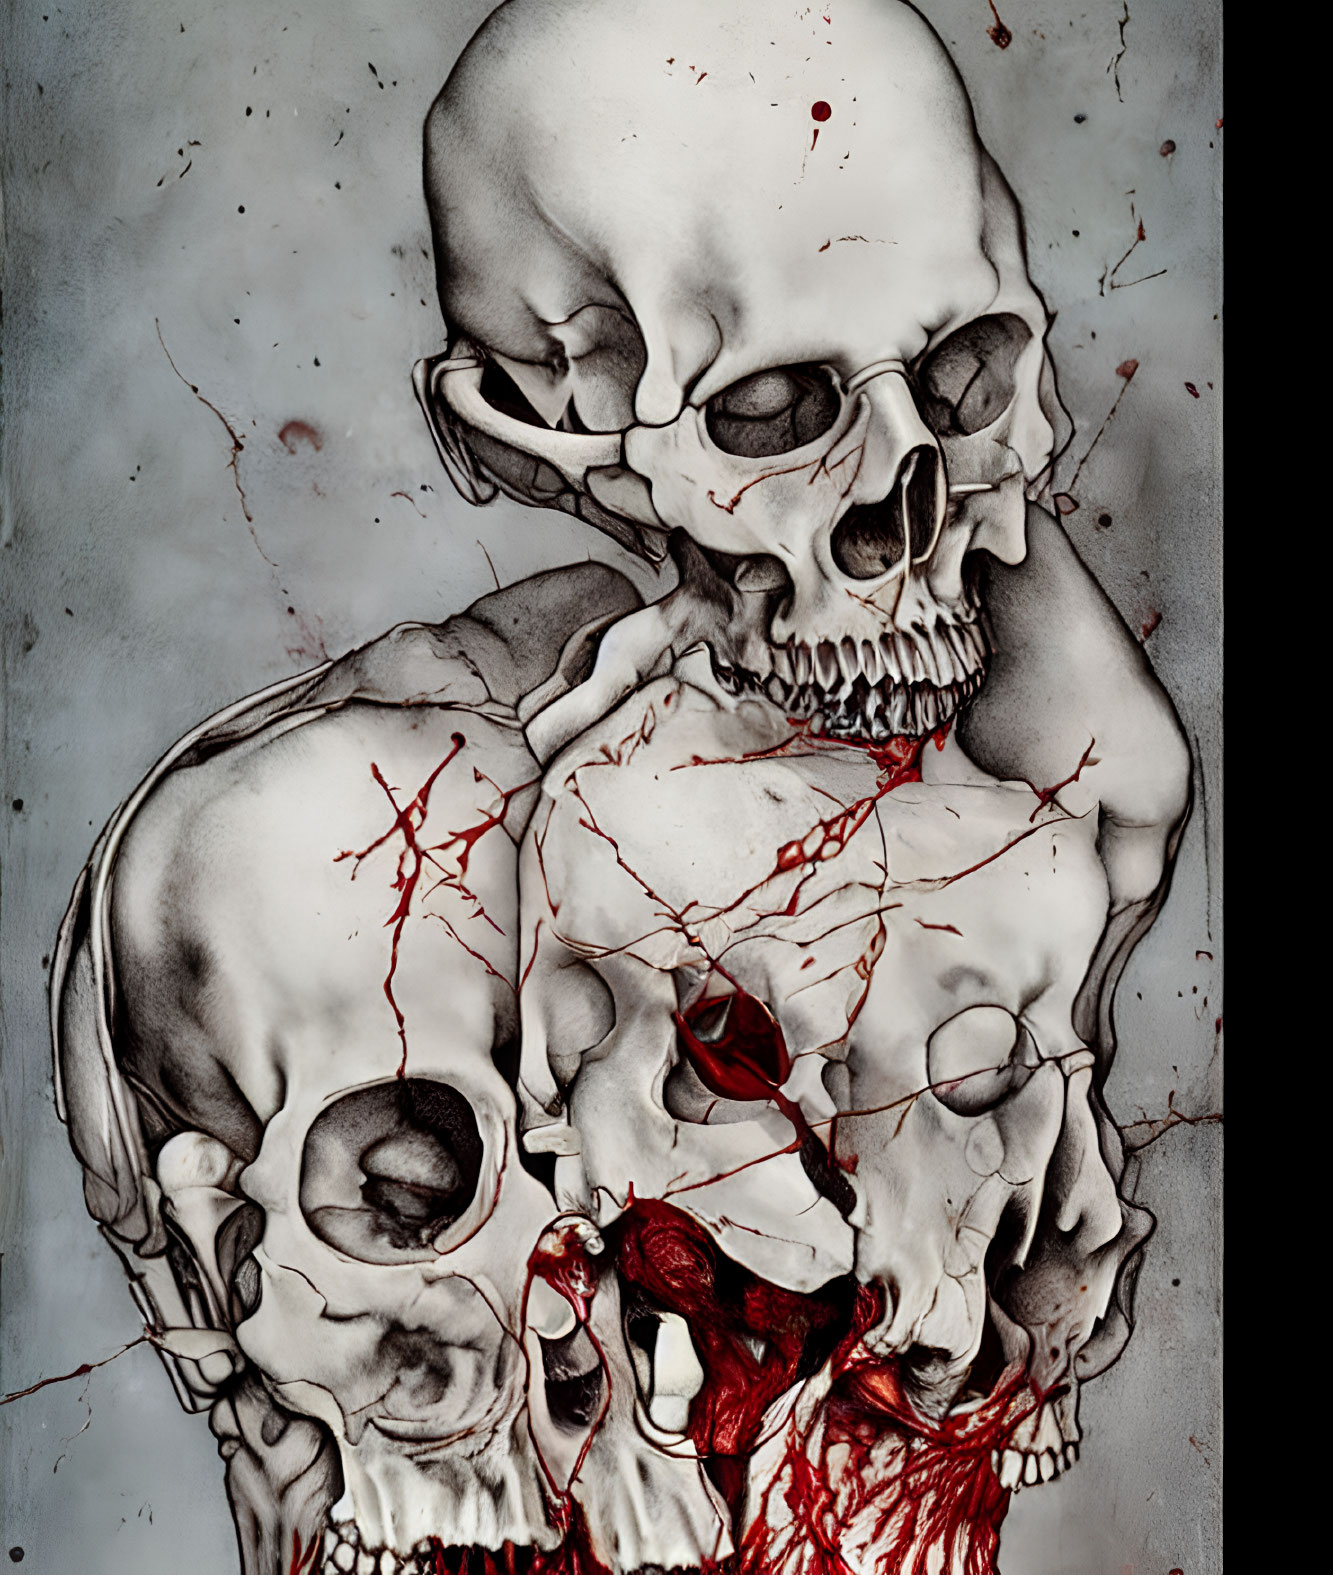 Dark Illustration of Three Stacked Skulls with Cracks and Blood Splatter